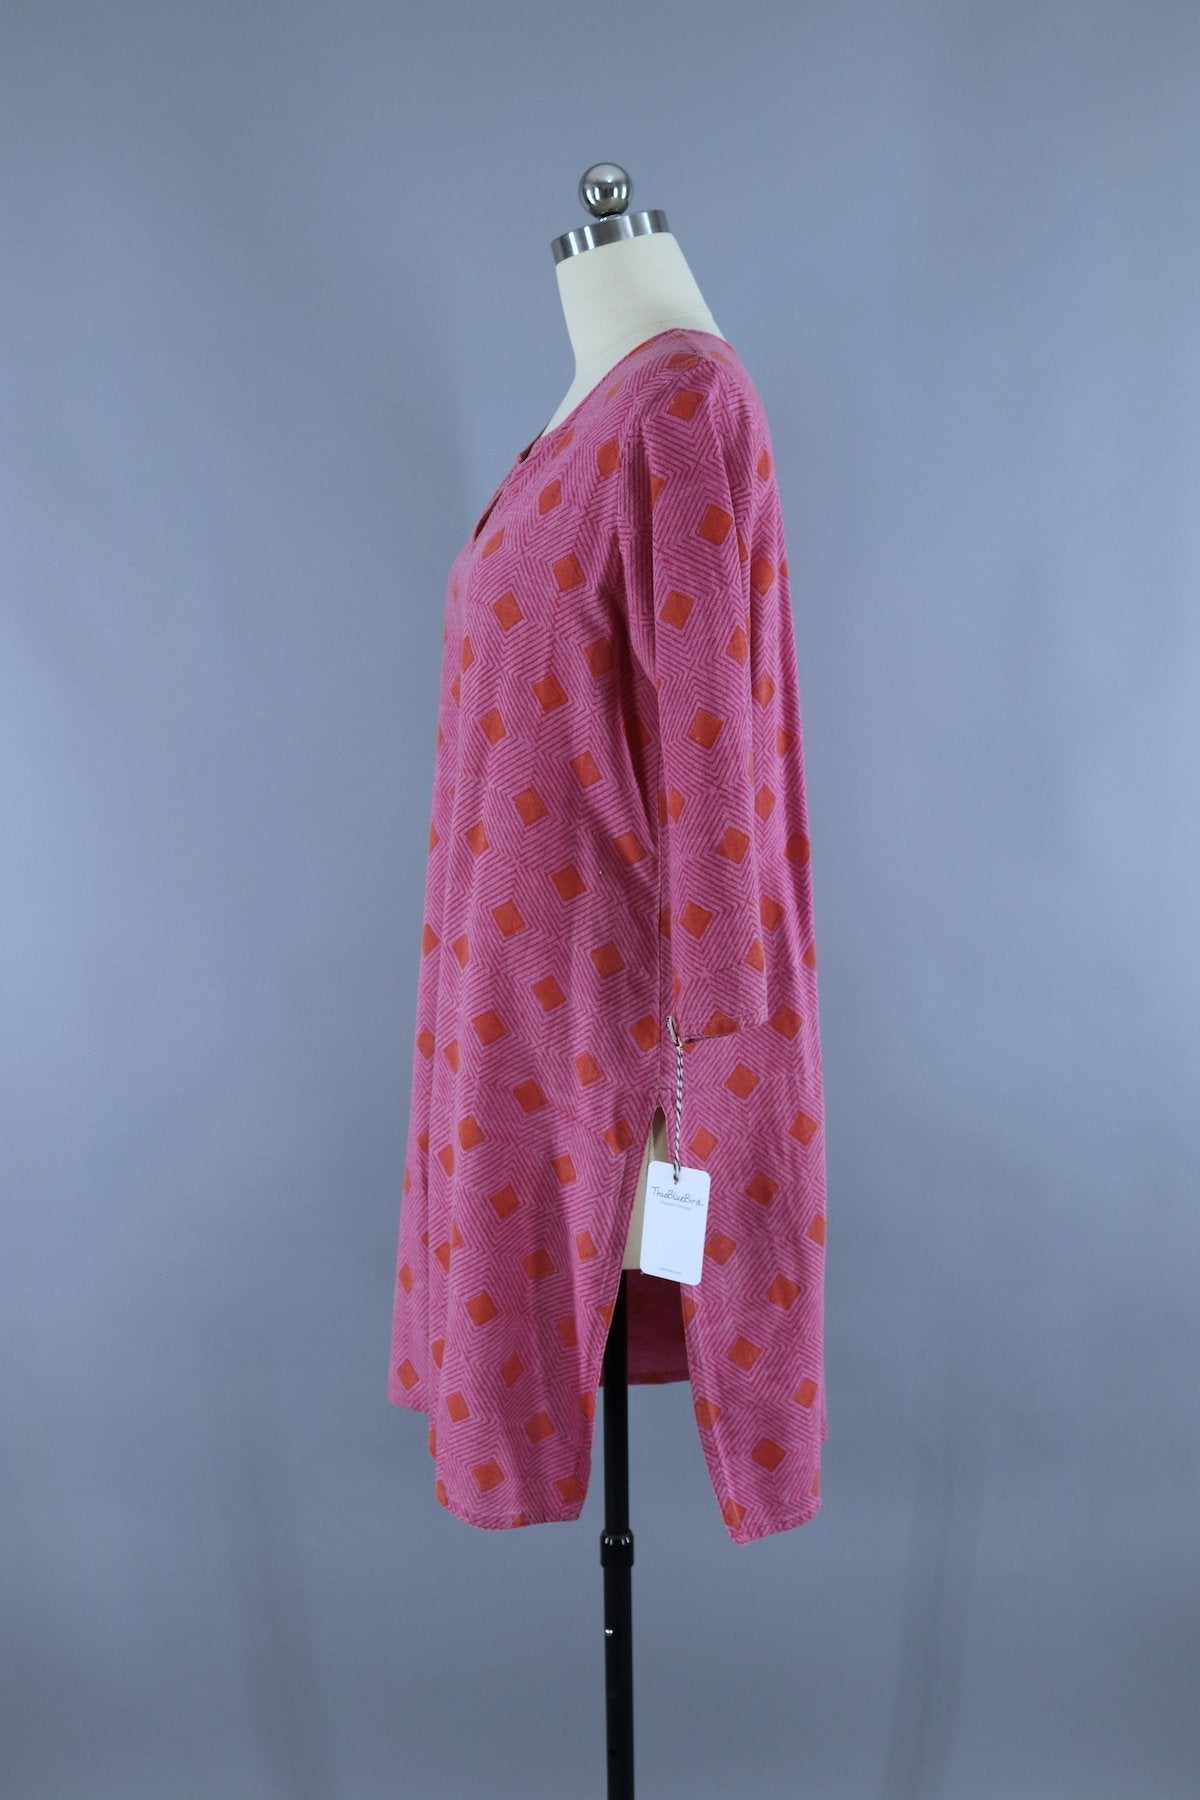 Vintage Cotton Caftan Dress / Pink & Orange Geometric Print - ThisBlueBird